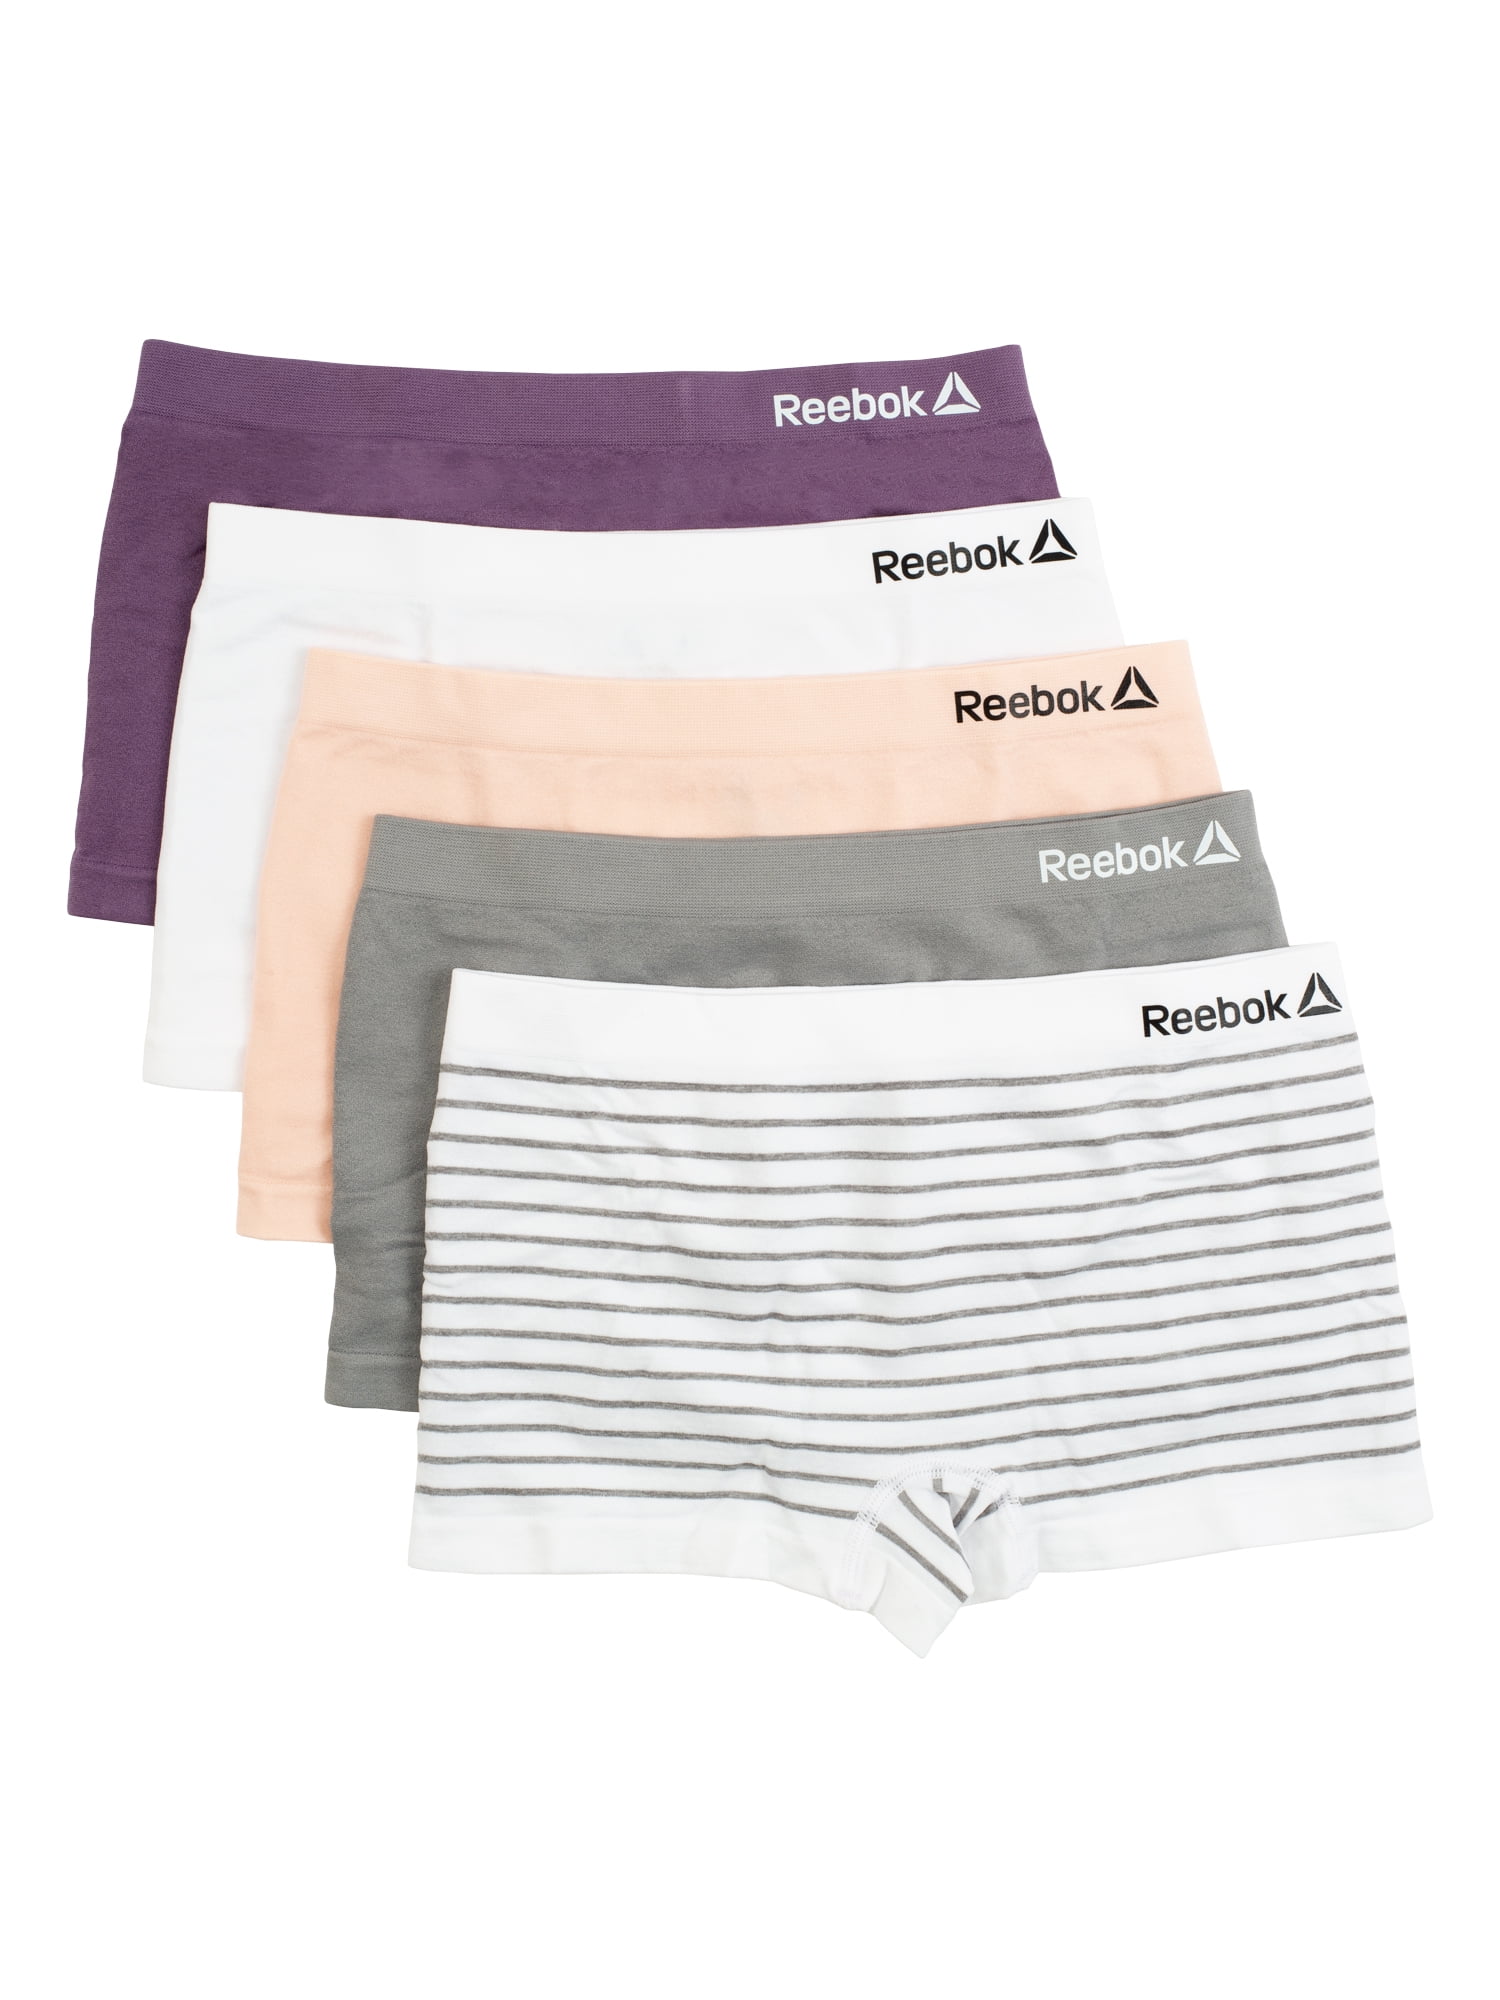 Reebok Girls Seamless Boyshort Panties Underwear, 5-Pack, Sizes S